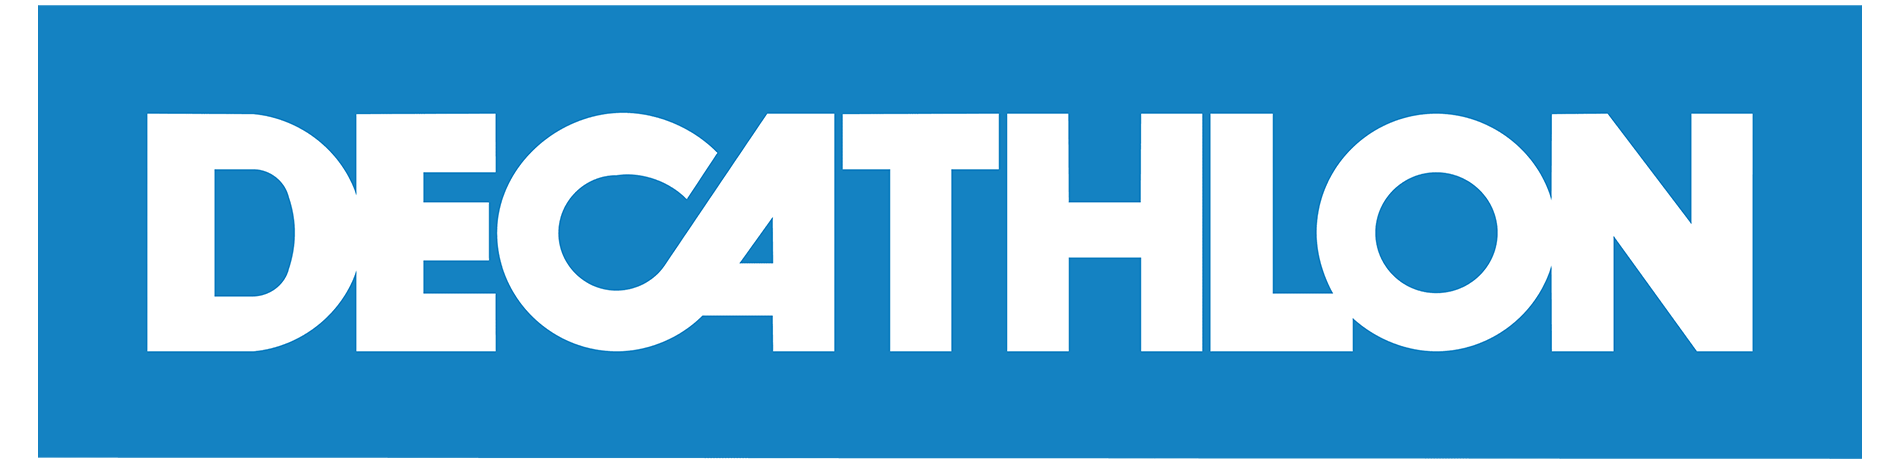 Decathlon-Logo-1